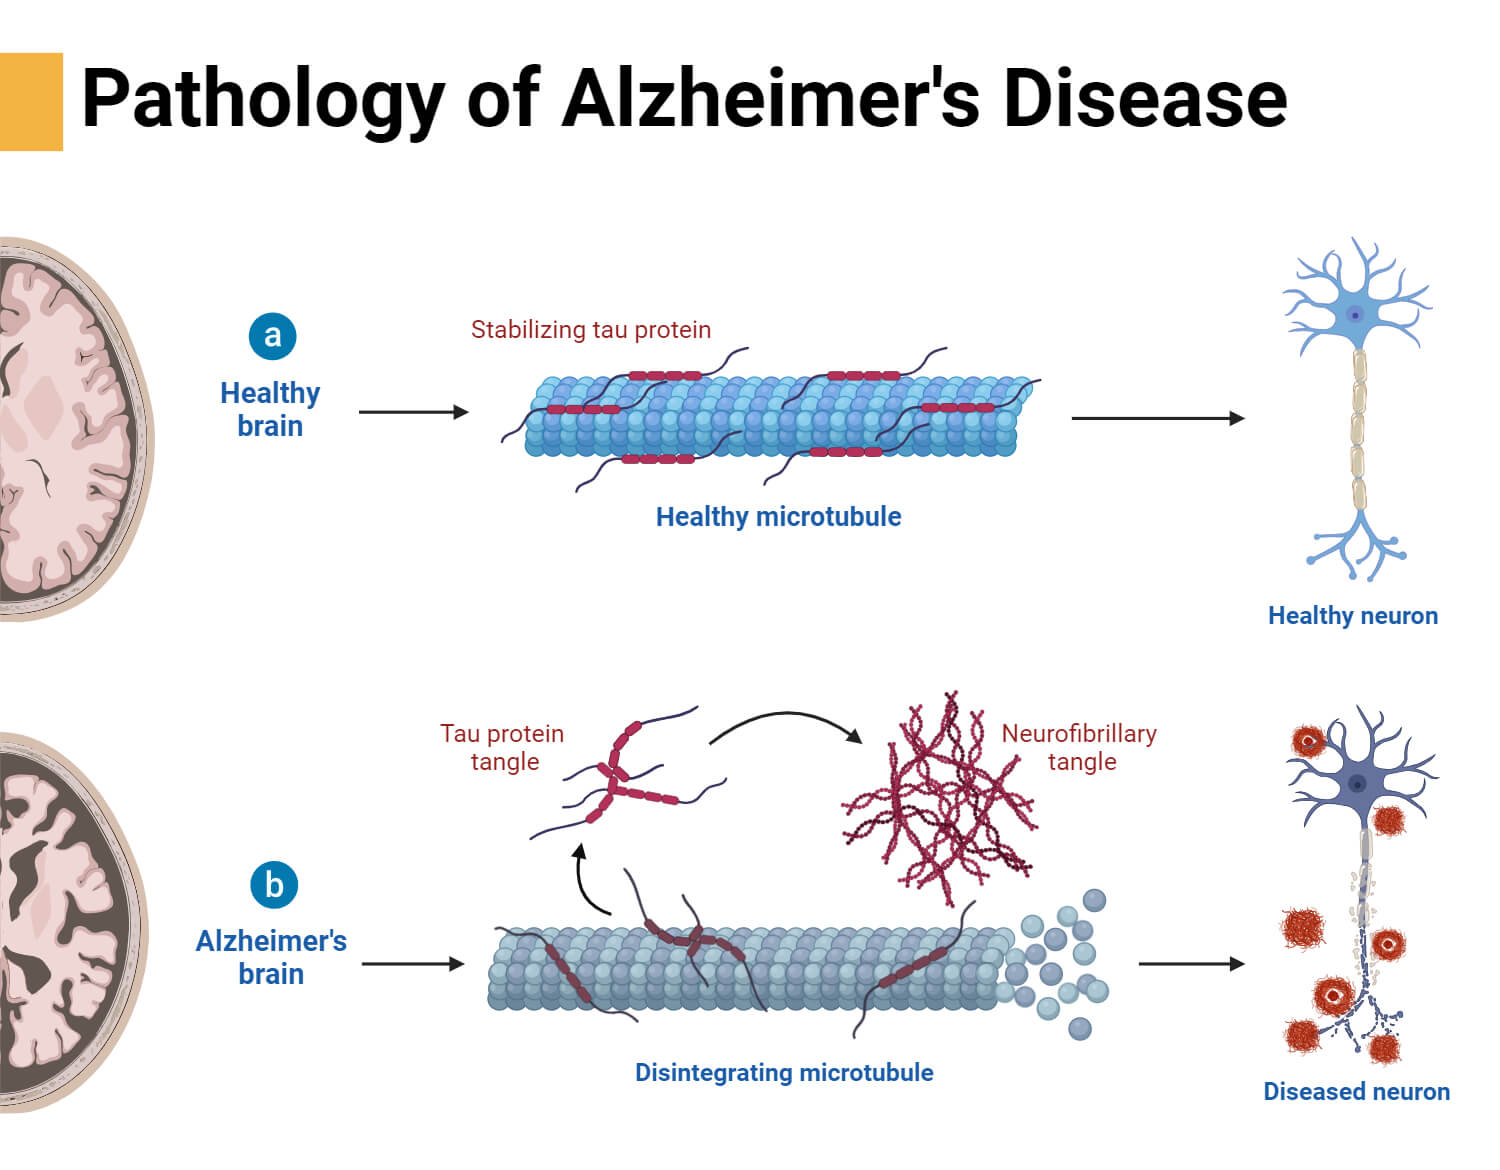 Pathology of Alzheimer's Disease